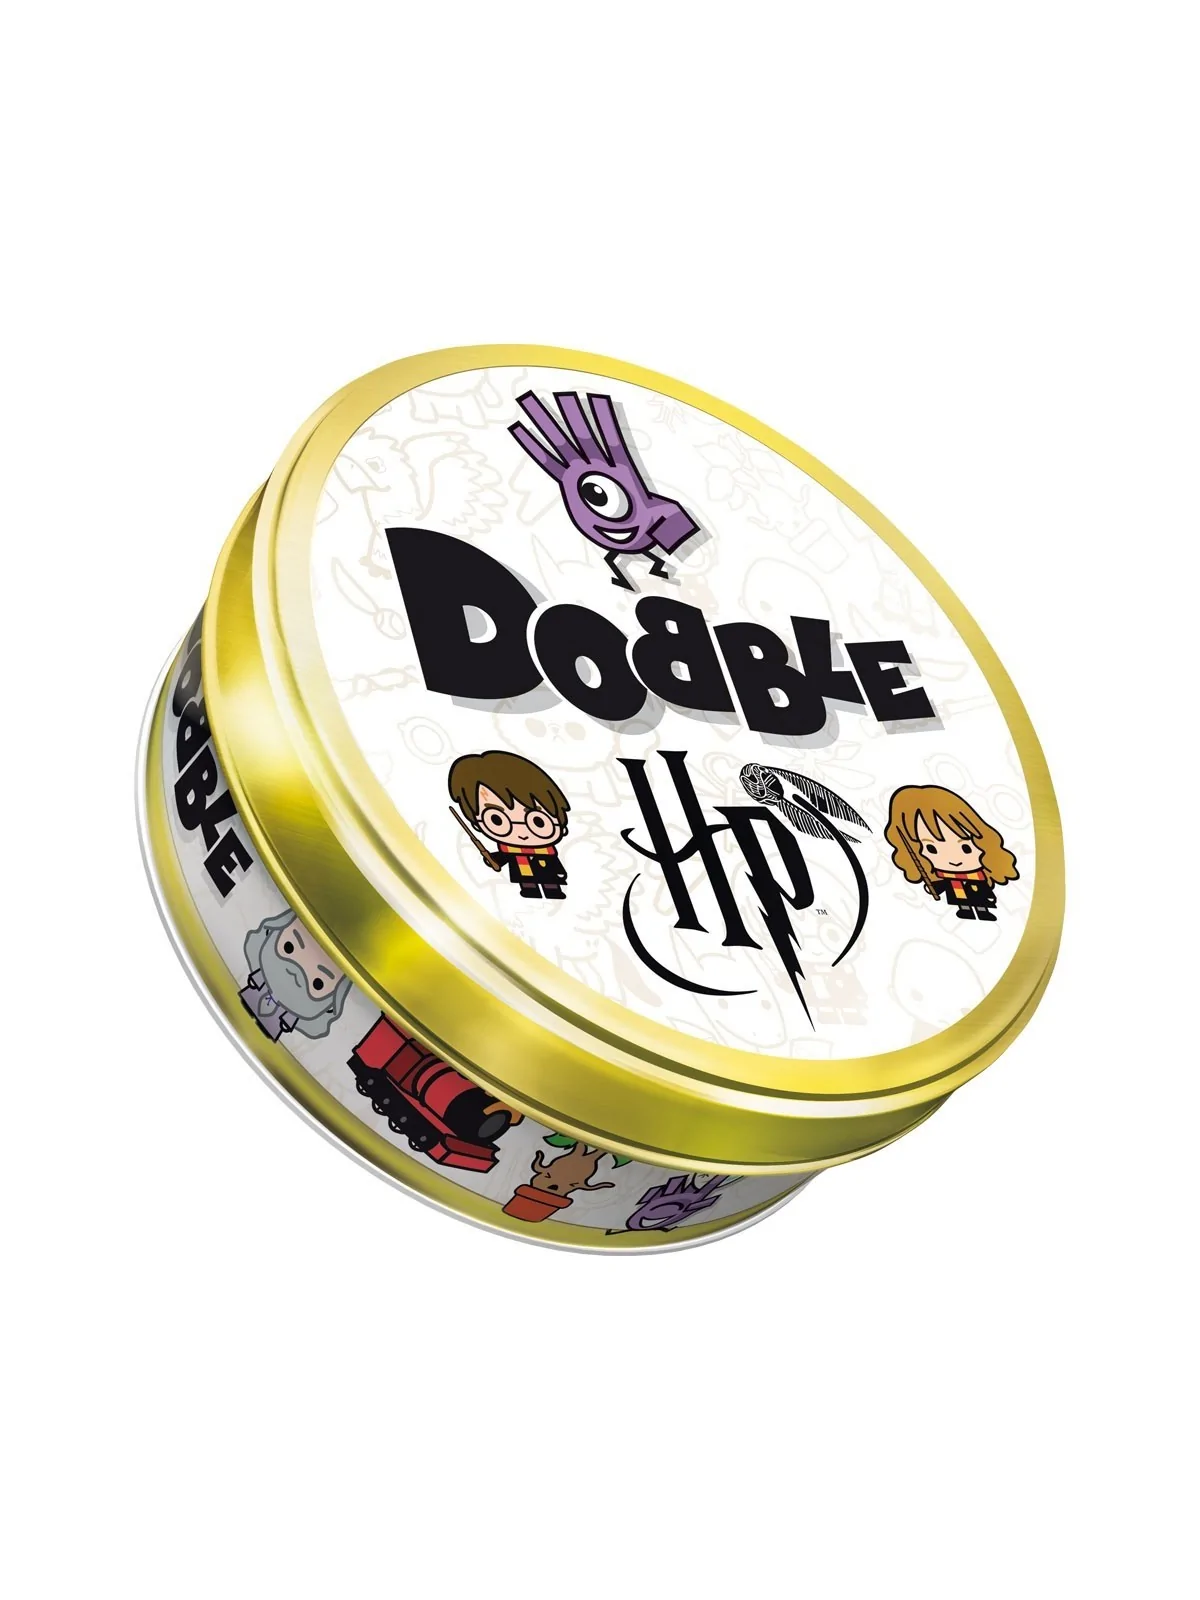 Comprar Dobble Harry Potter barato al mejor precio 15,99 € de Zygomati